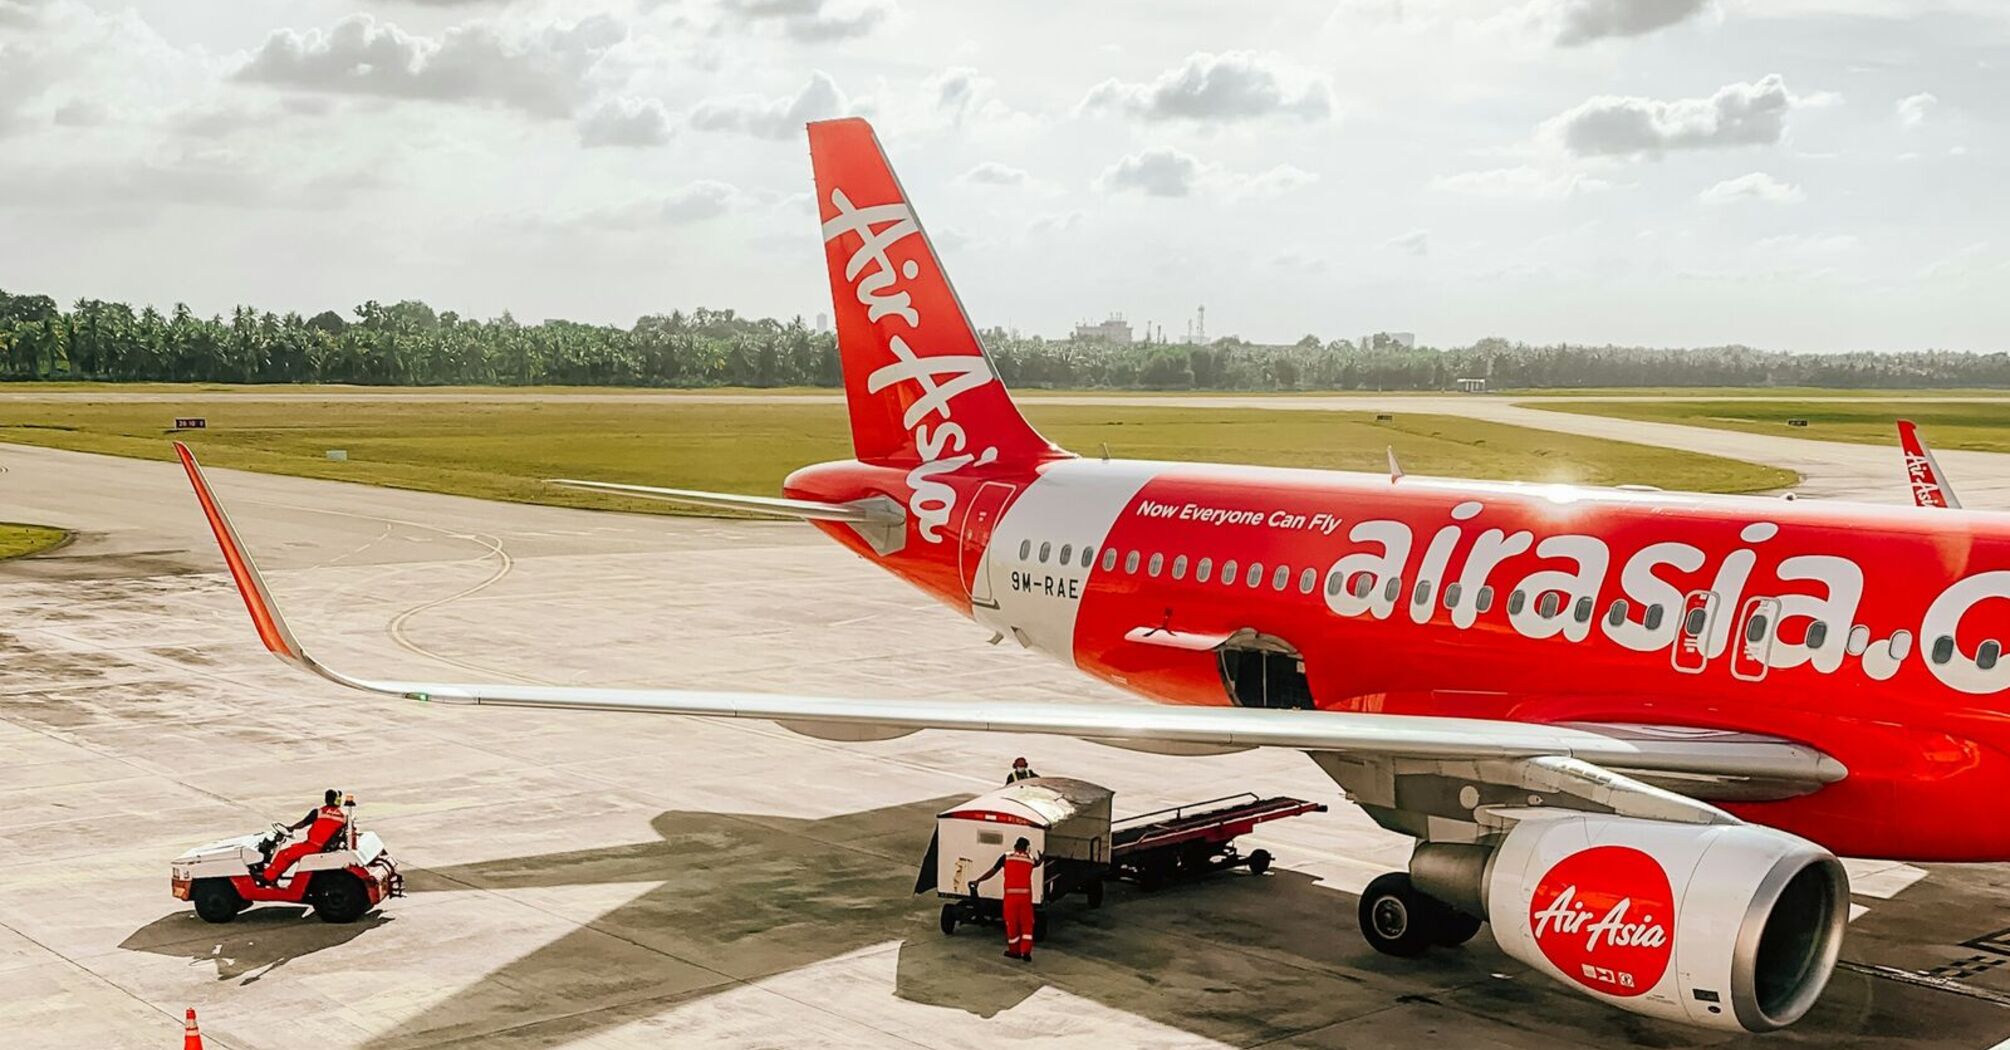 AirAsia's plane at the runway